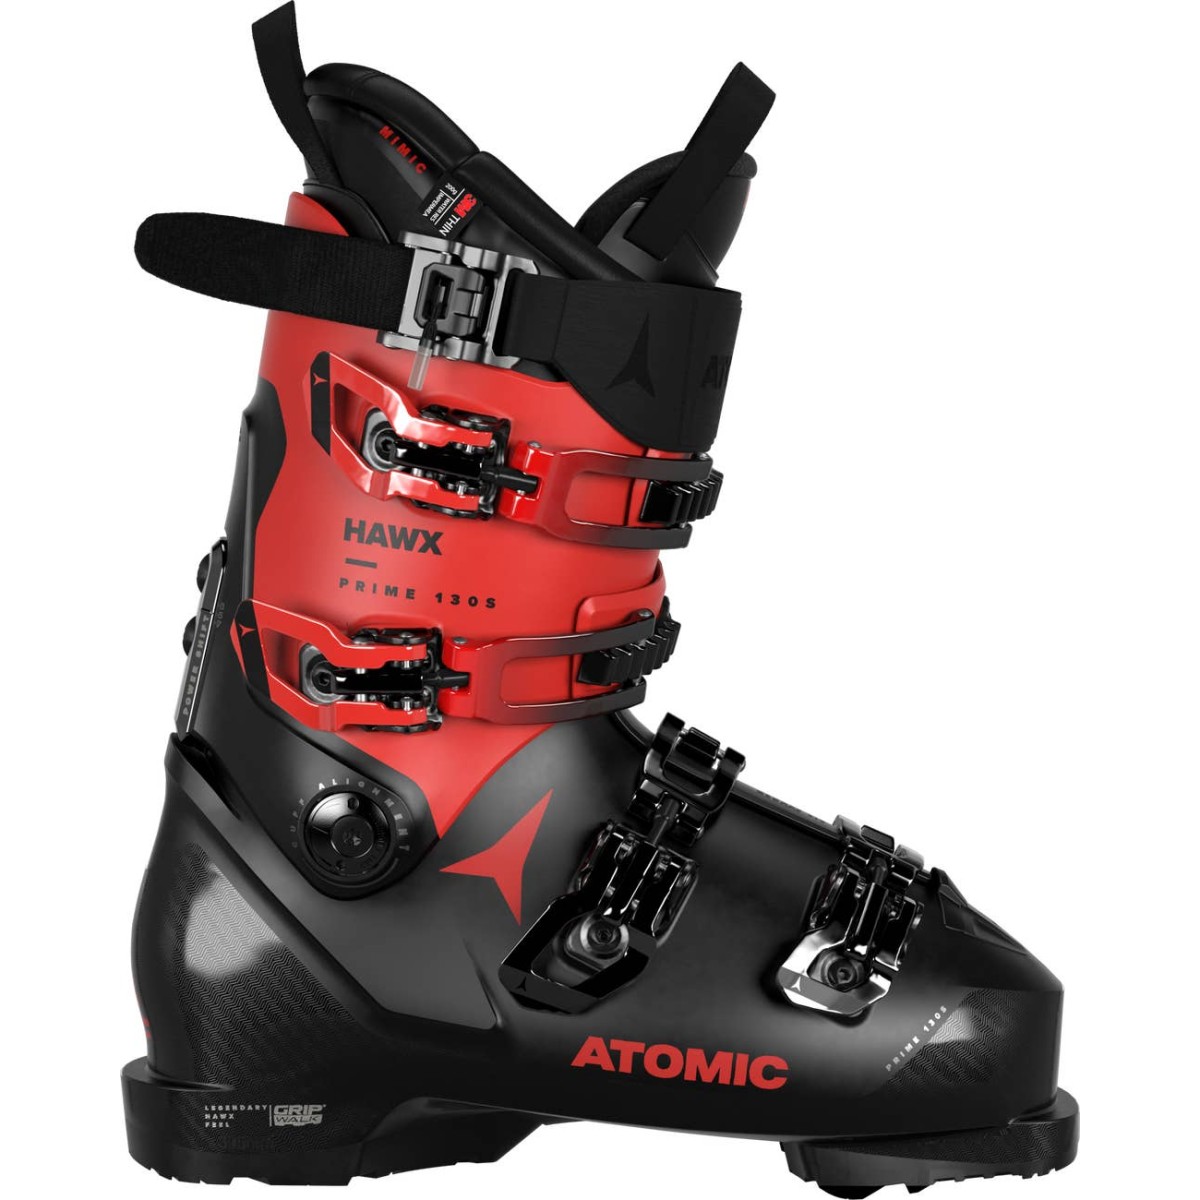 ATOMIC HAWX PRIME 130 S GW kalnu slēpošanas zābaki - black/red